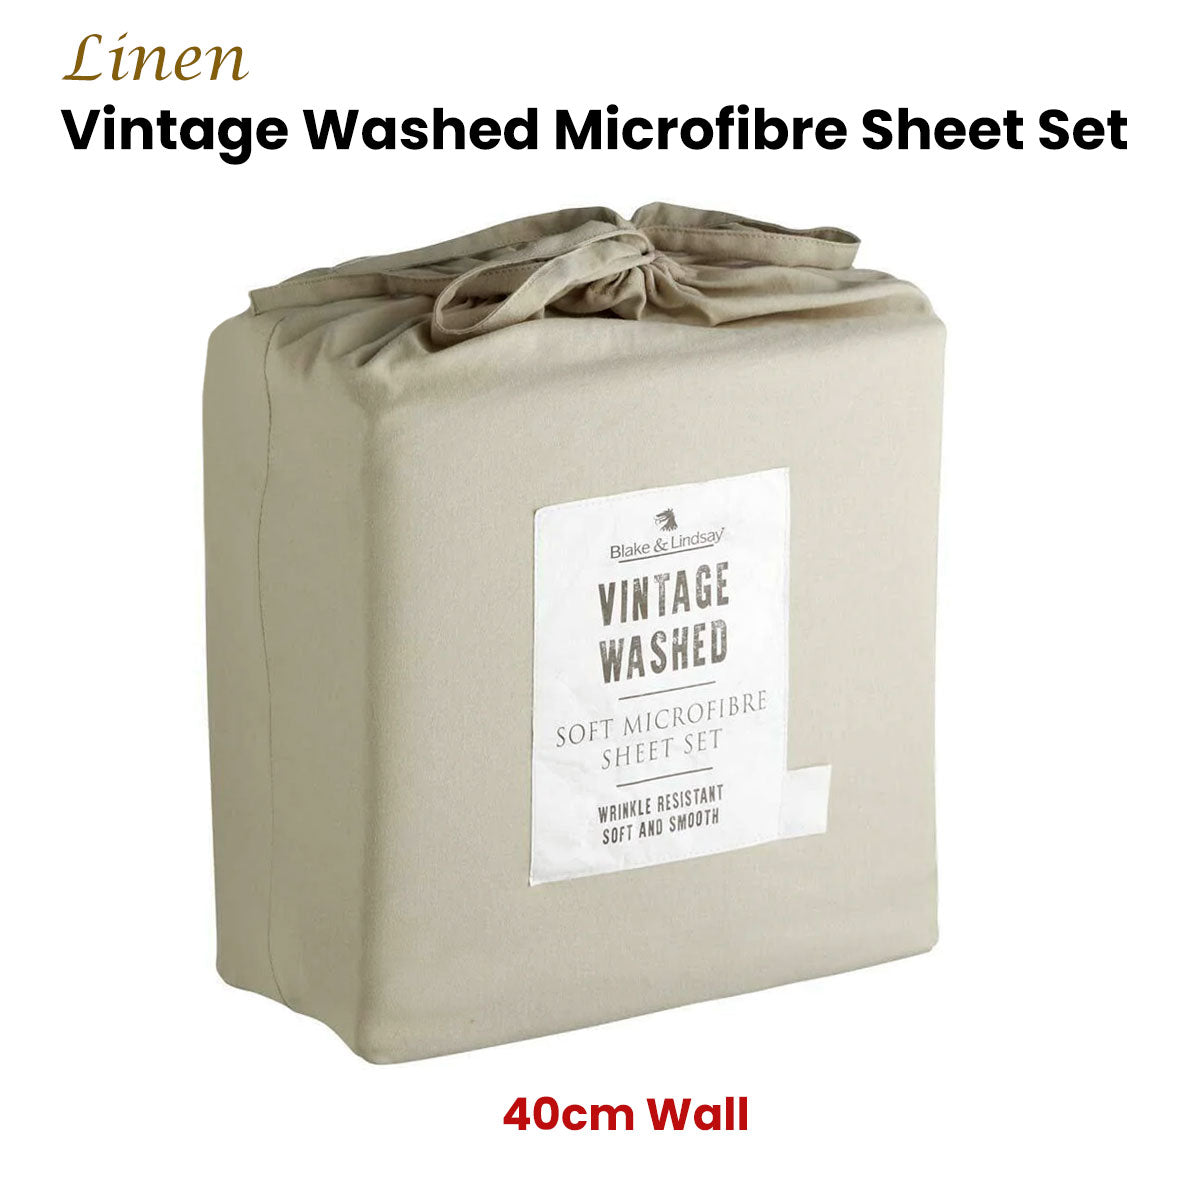 Blake & Lindsay Linen Vintage Washed Microfibre Sheet Set 40cm Wall Double